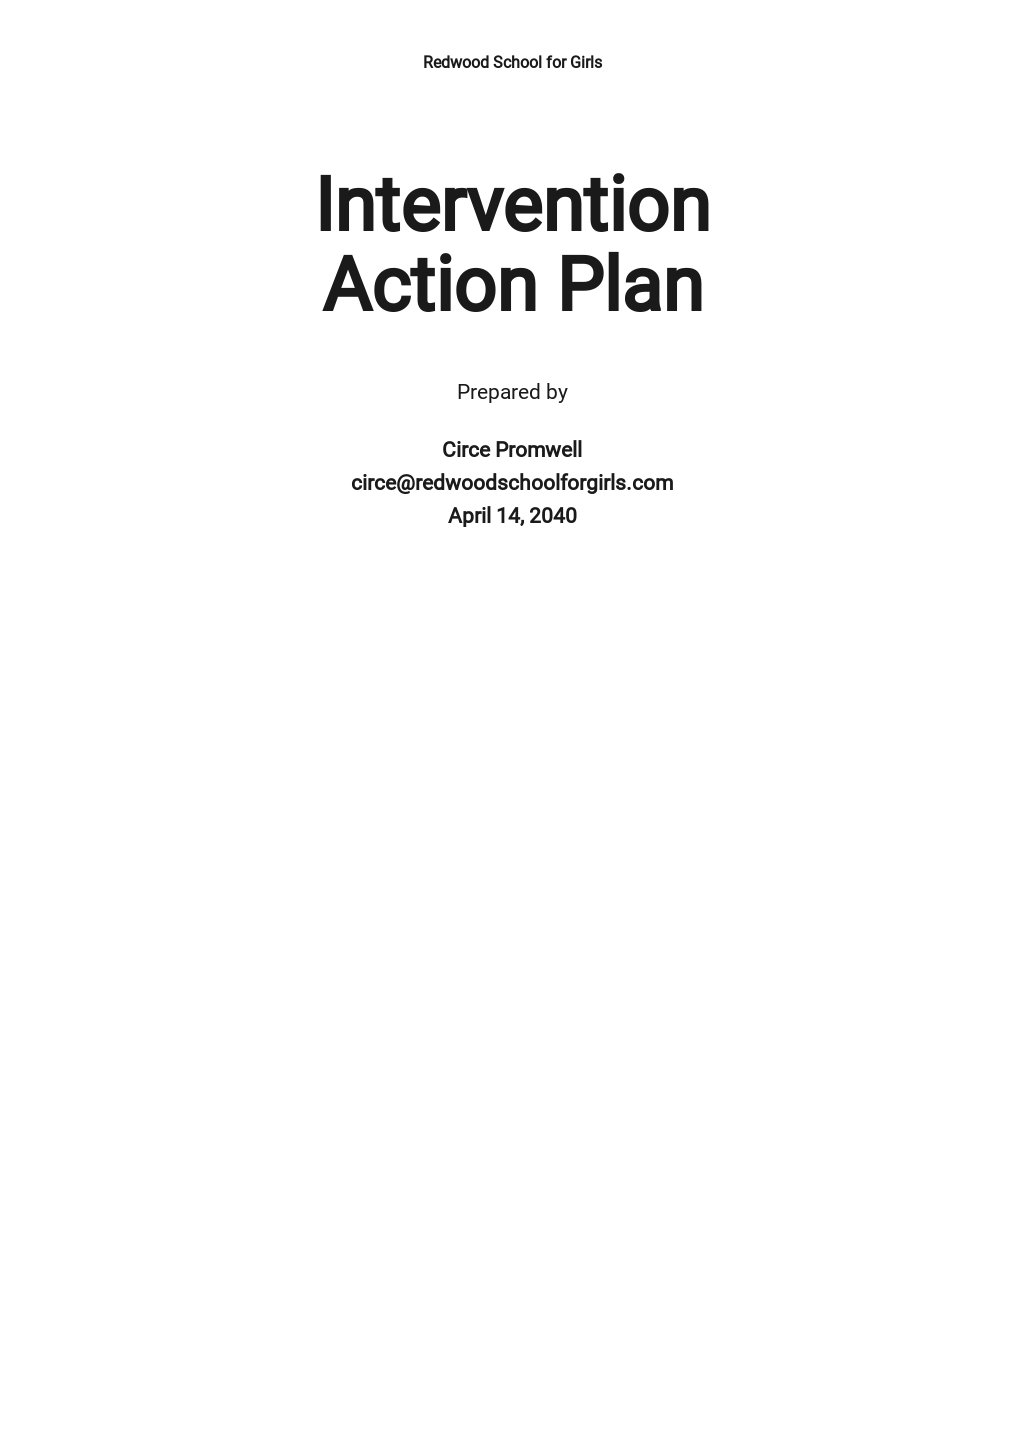 Intervention Action Plan Template.jpe